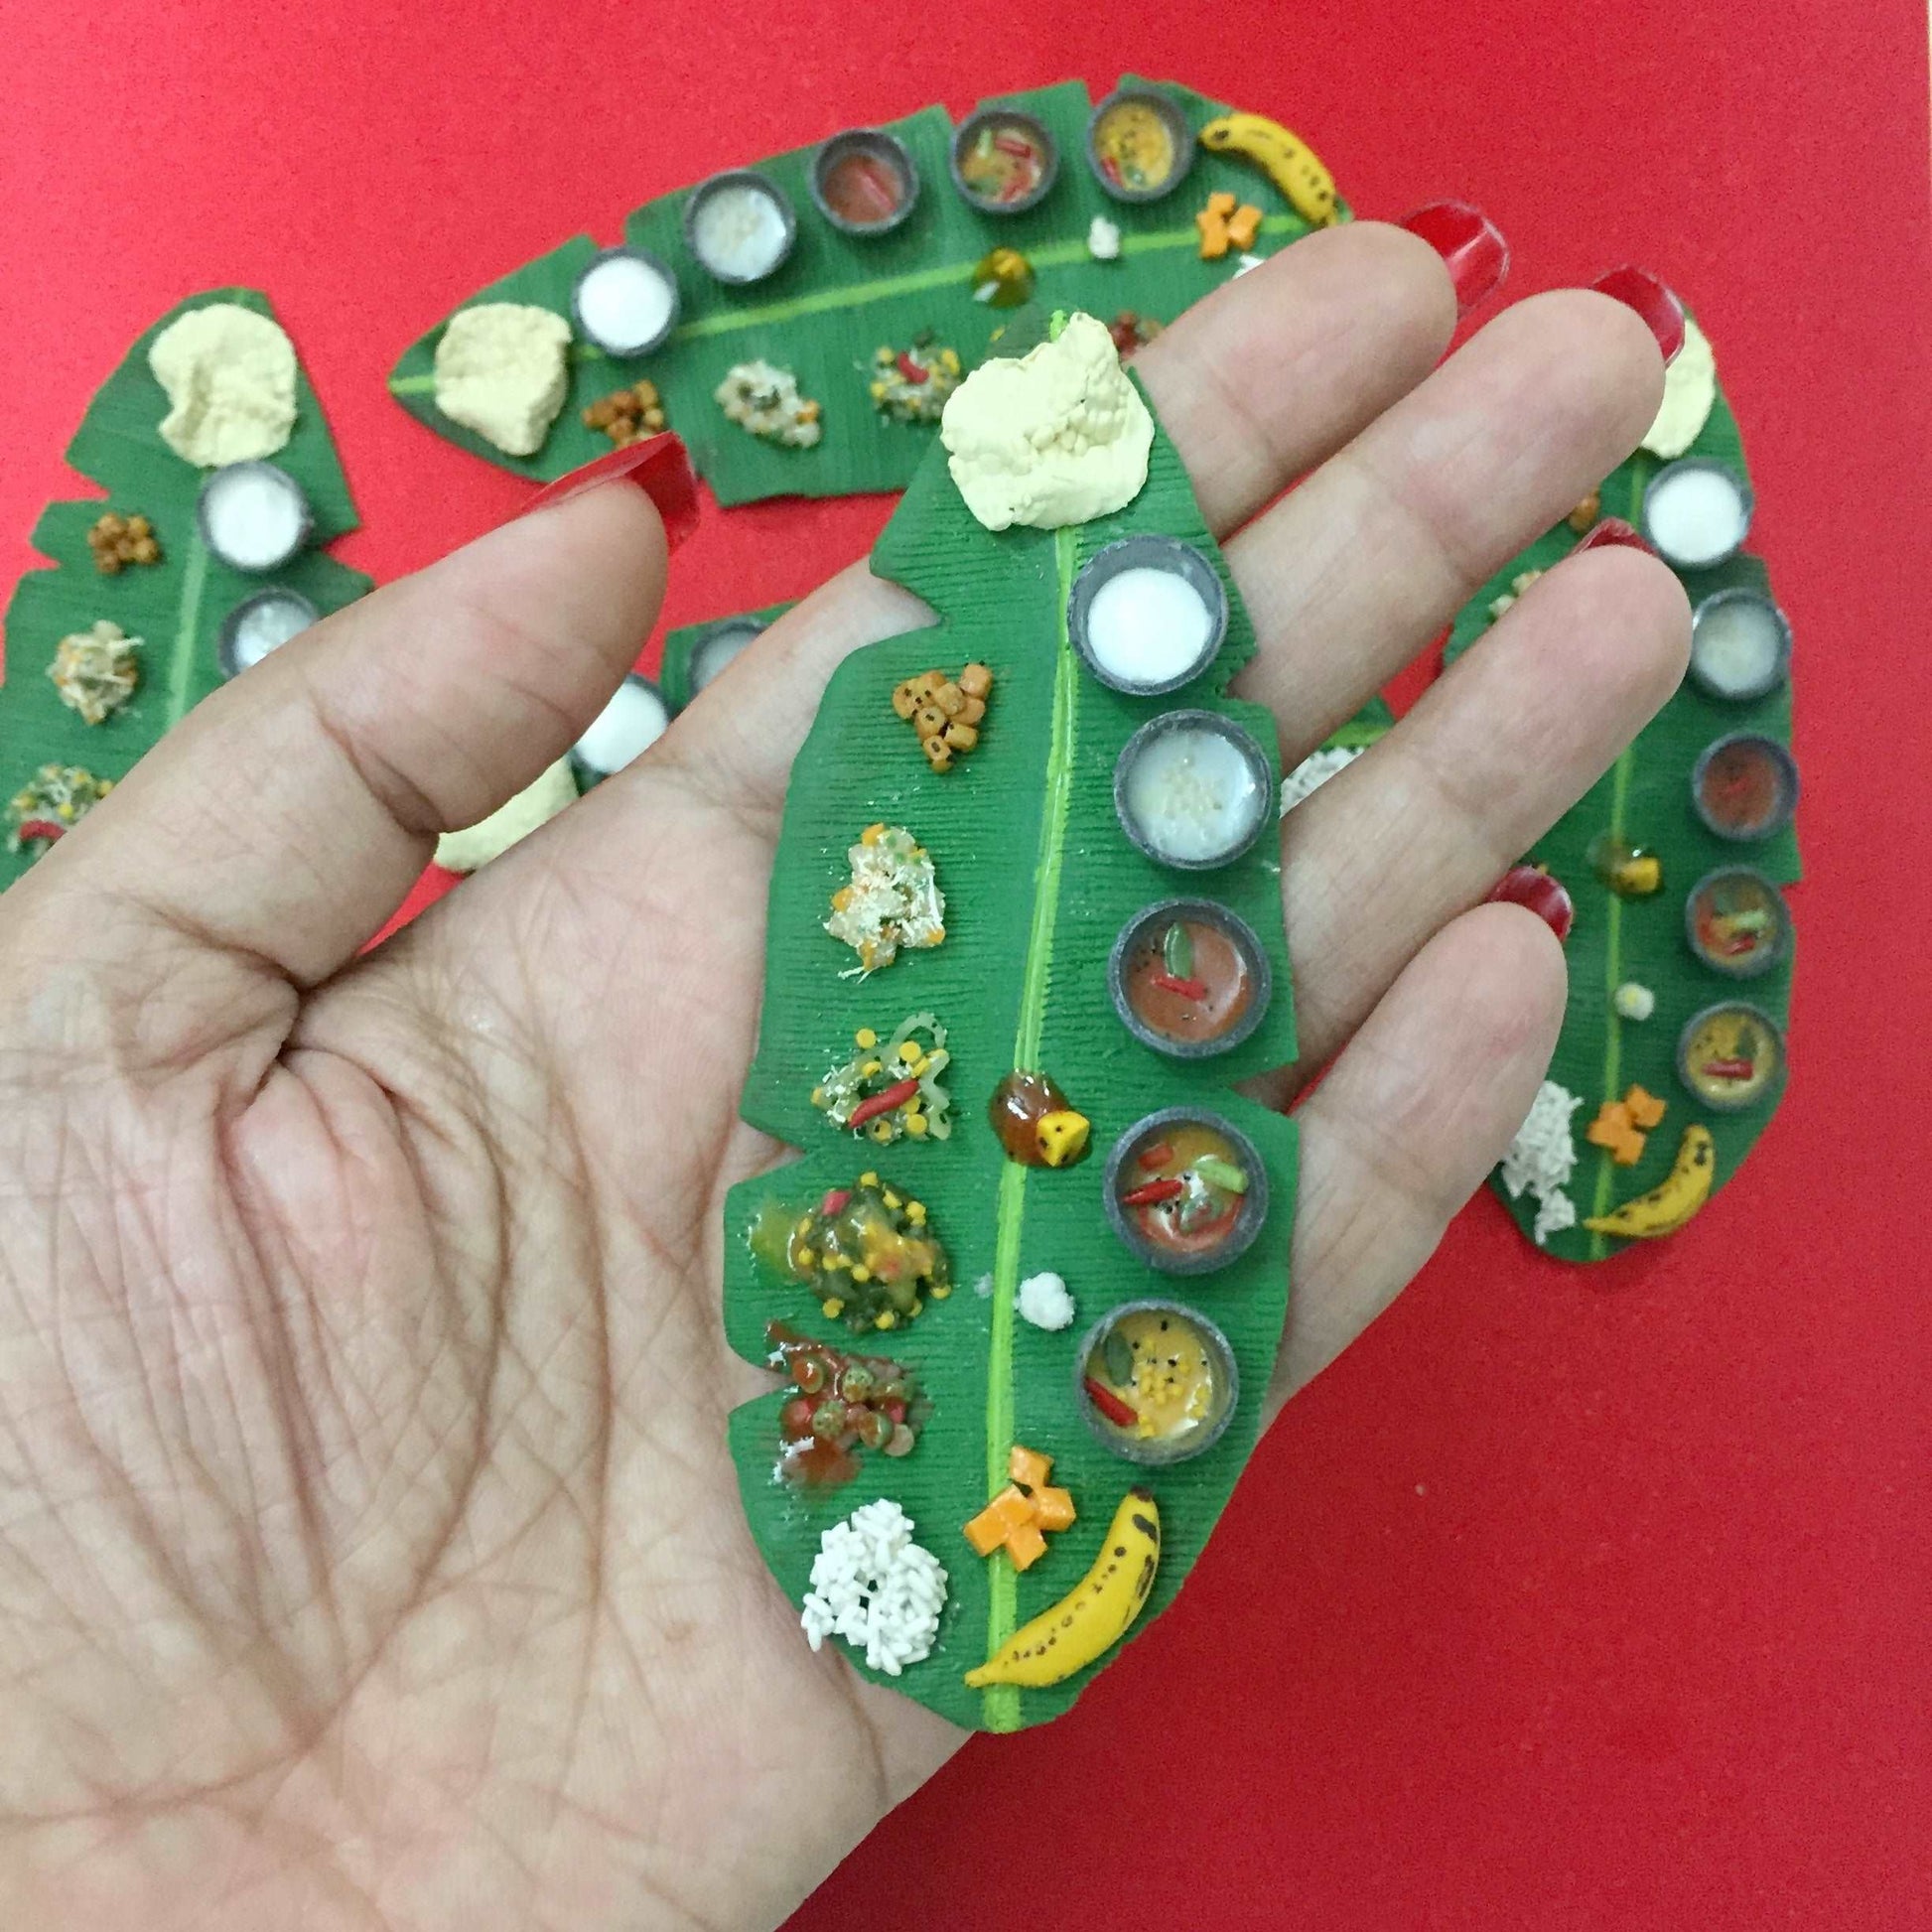 Tamil Vazha Ellai Sapadu-Banana Leaf Meal South Indian Miniature Food Magnet